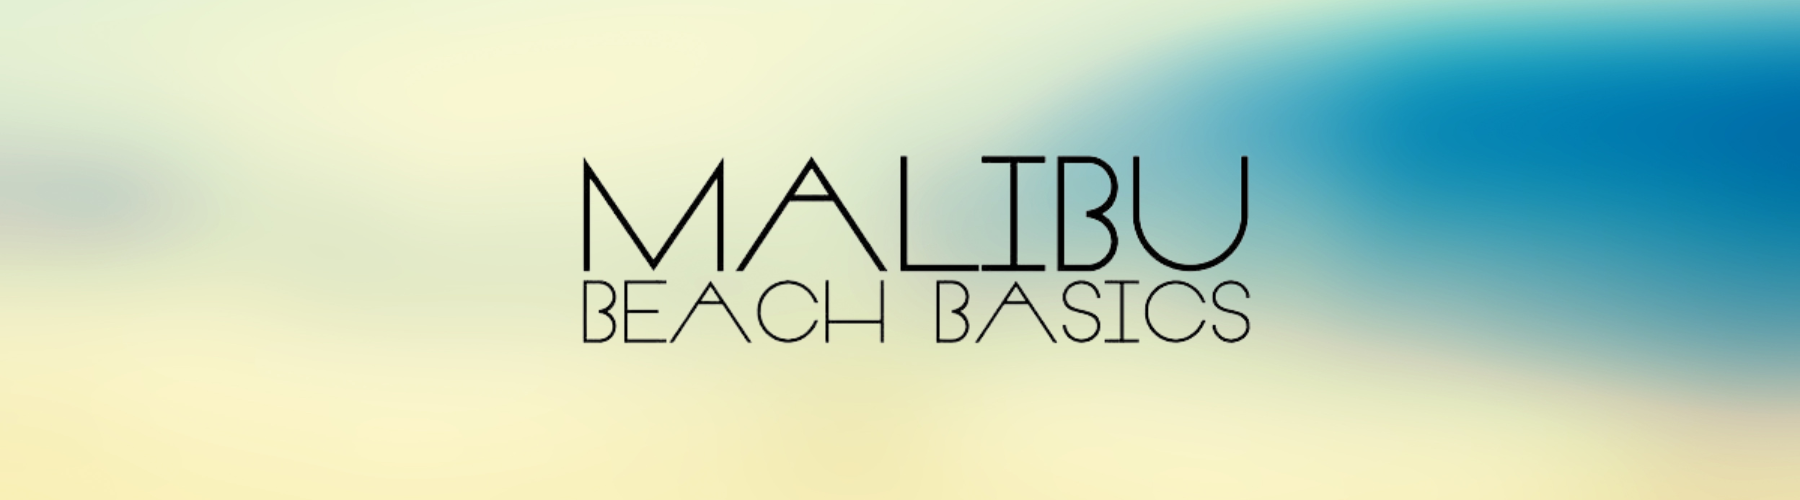 Malibu Beach Basics